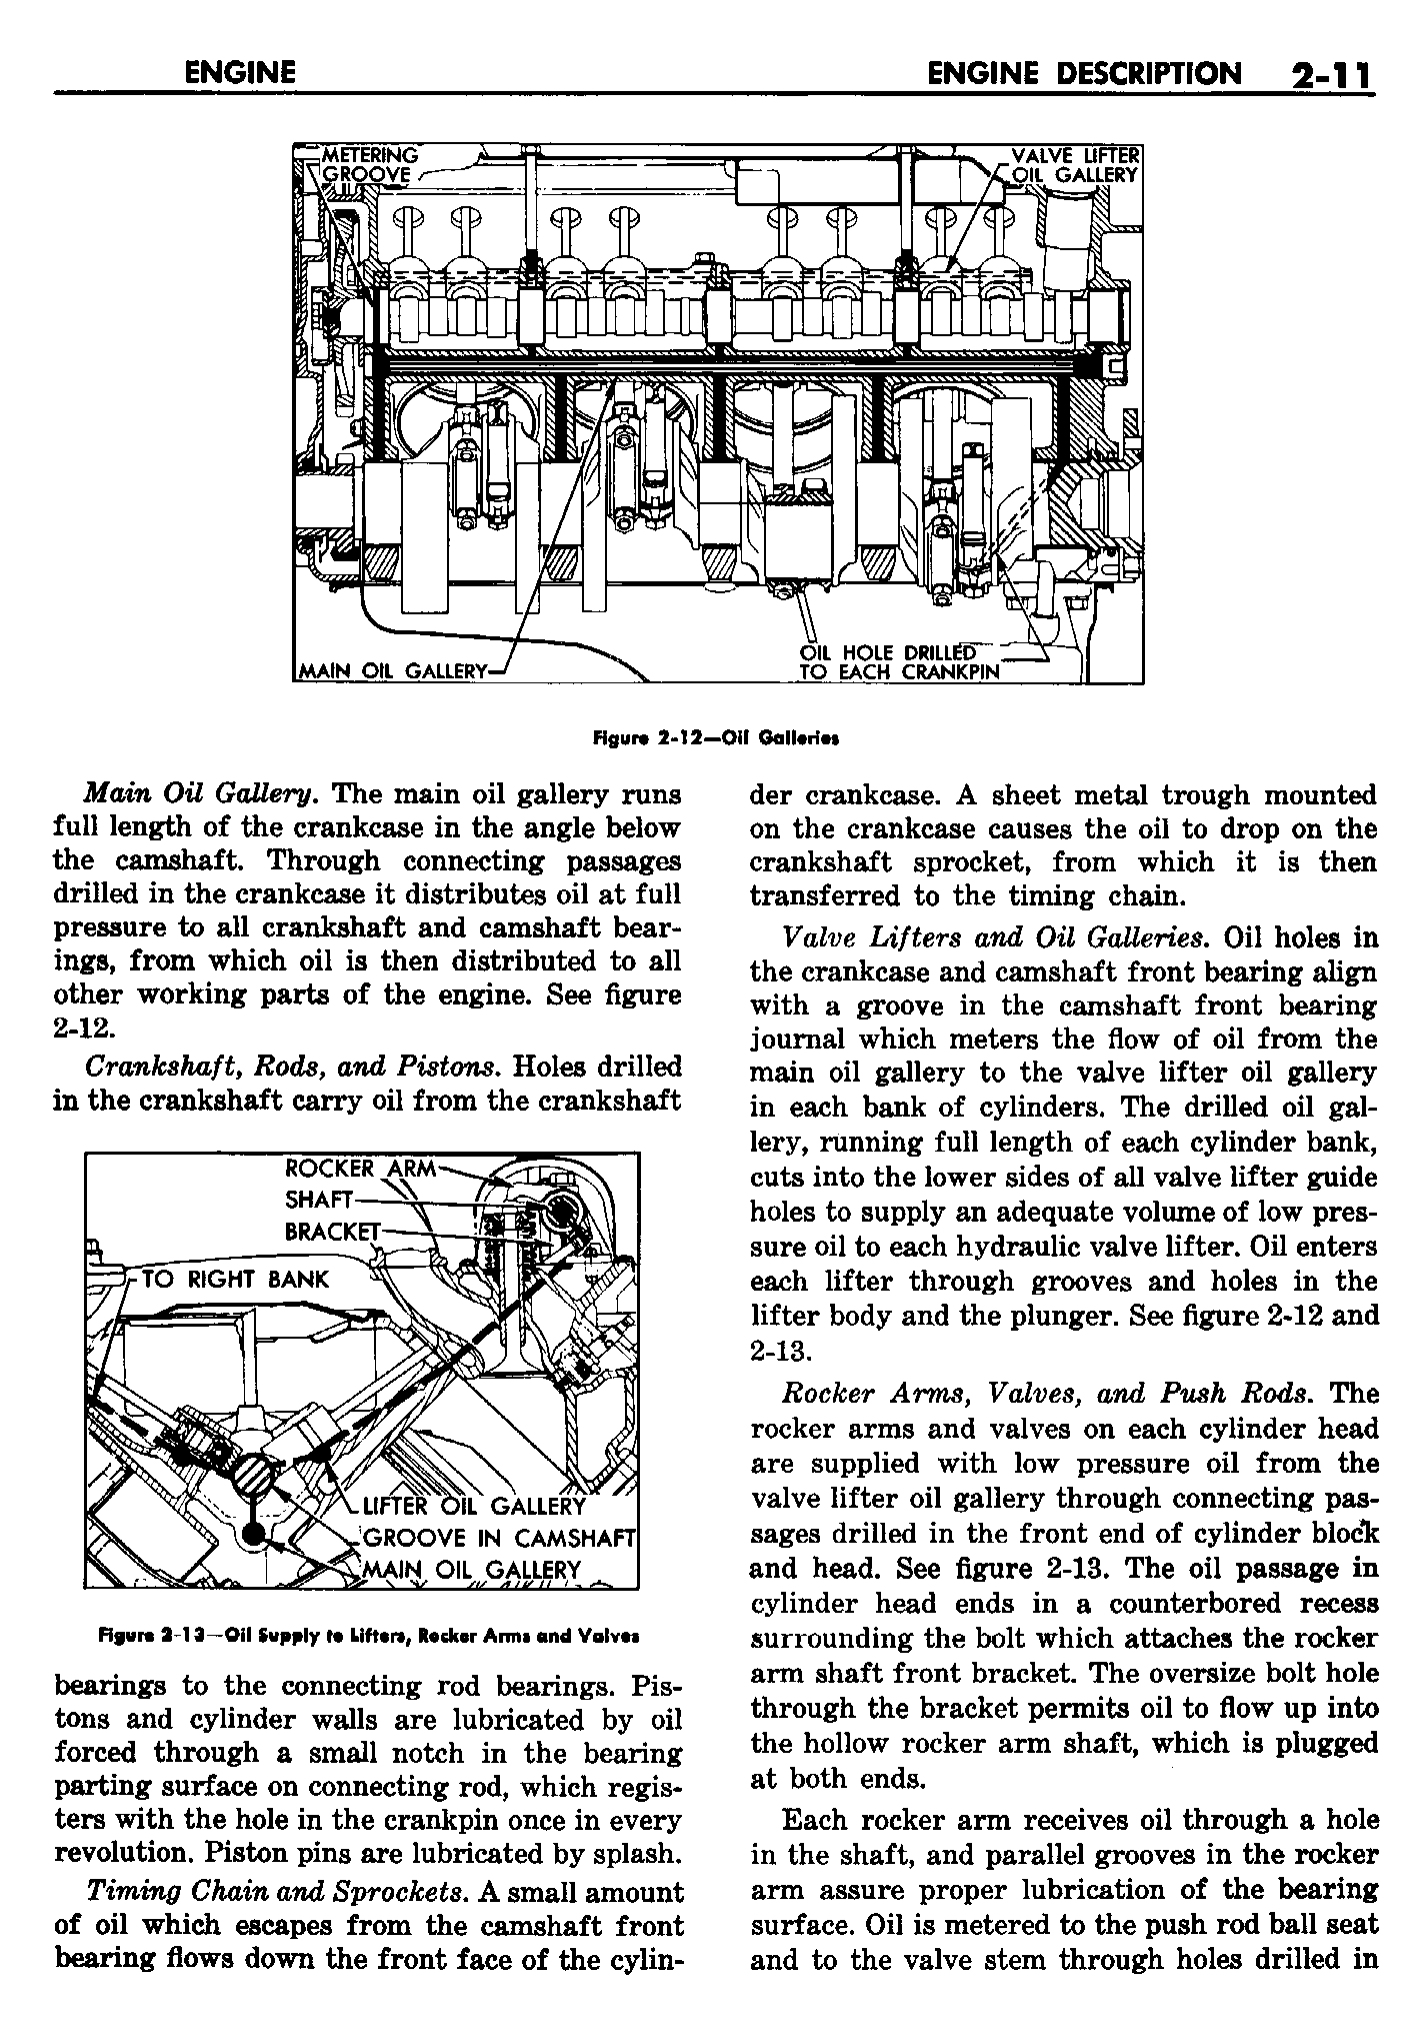 n_03 1958 Buick Shop Manual - Engine_11.jpg